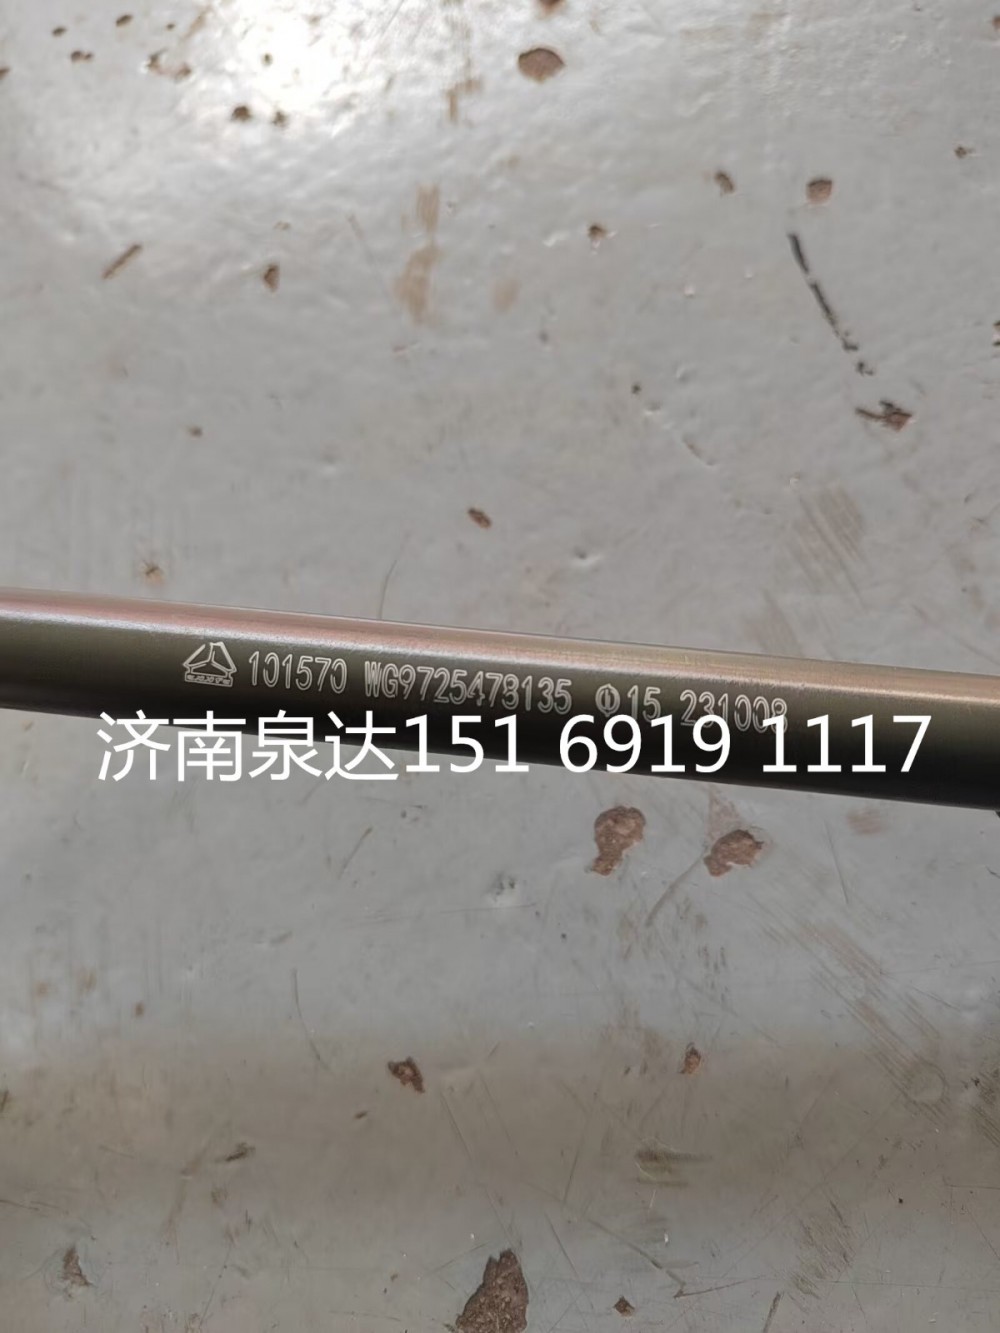 WG9725478135,带散热片回油钢管总成,济南泉达汽配有限公司